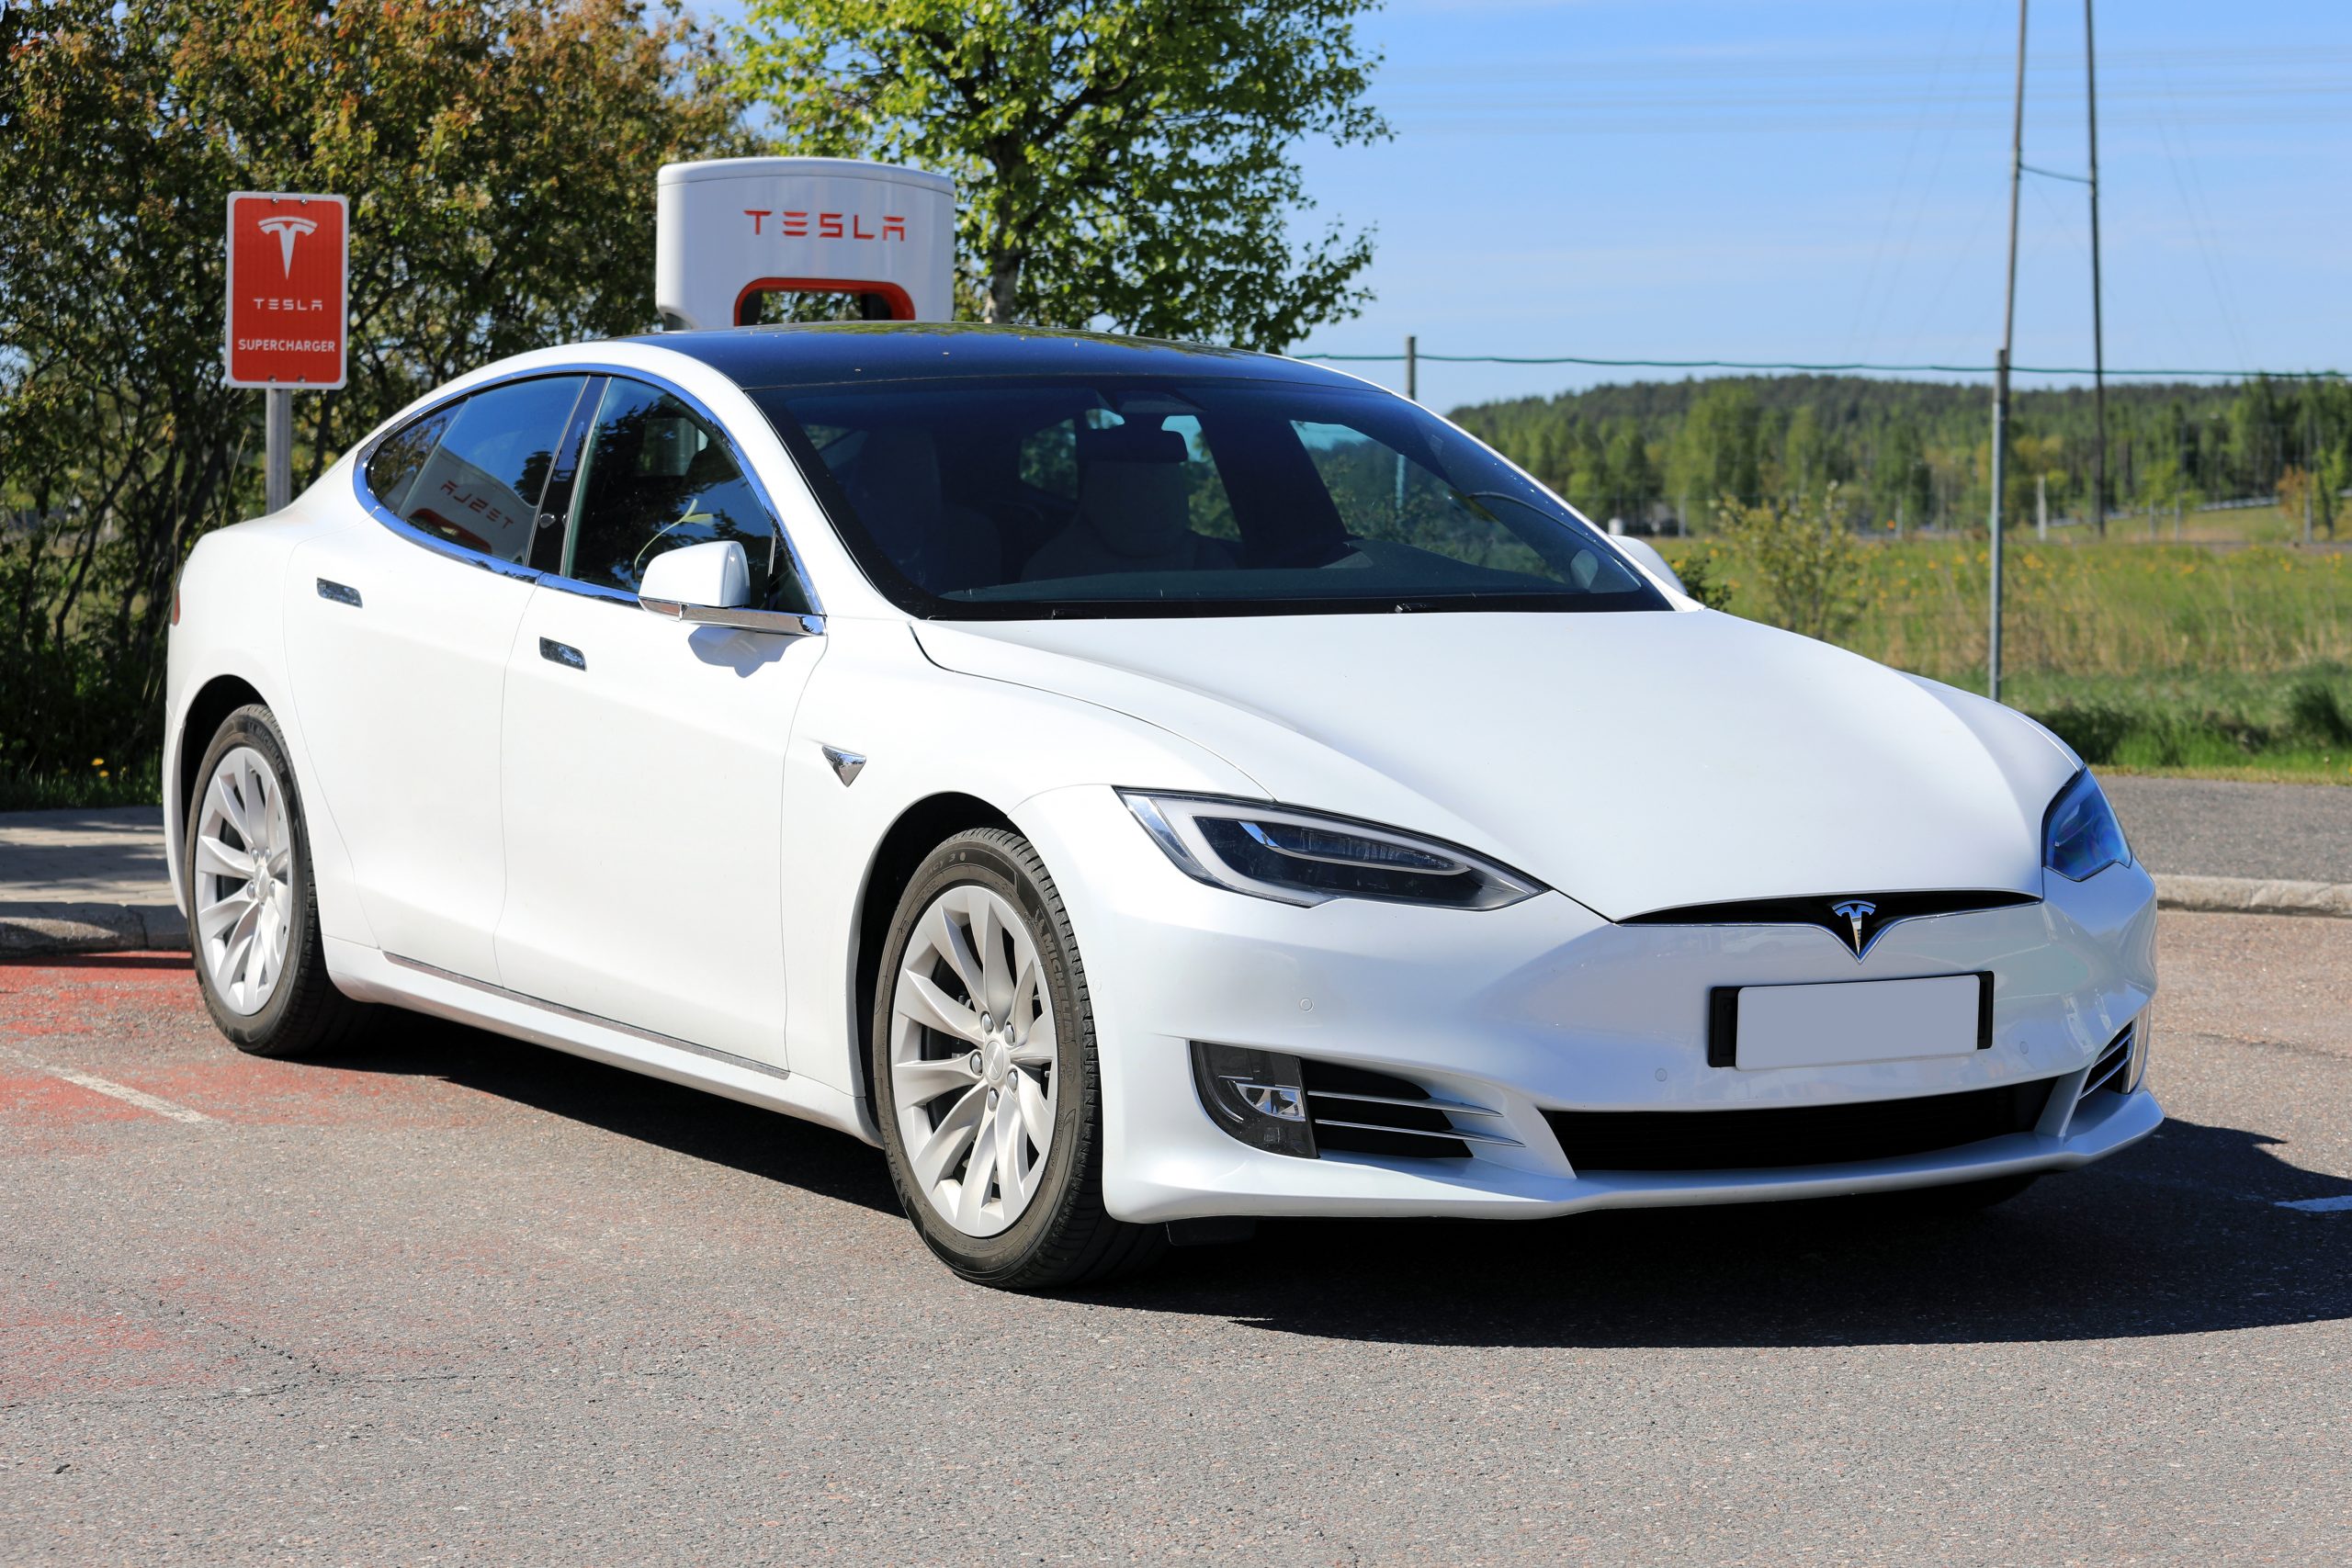 New Tesla Model S Electric Car Supercharging